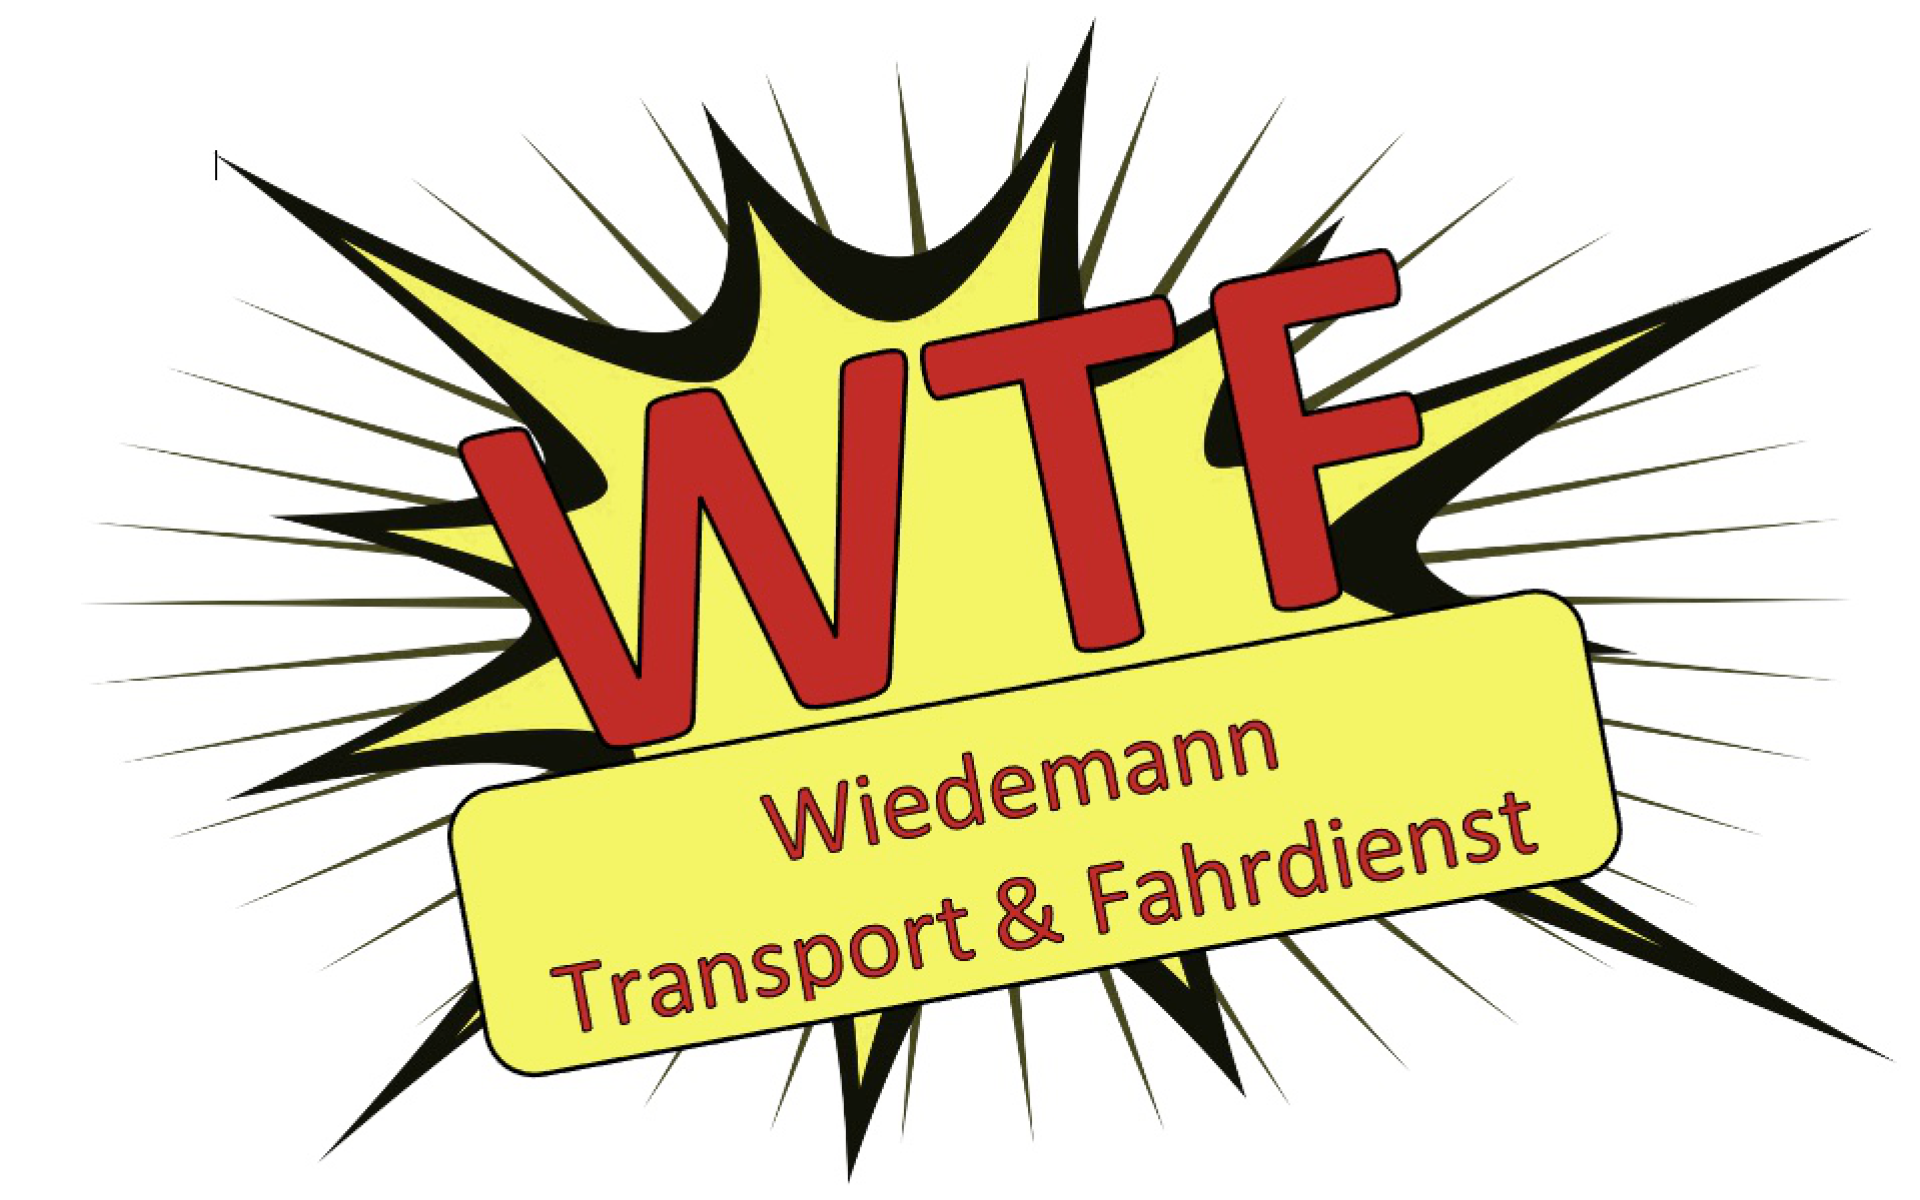 WTF / Wiedemann Transport & Fahrdienst